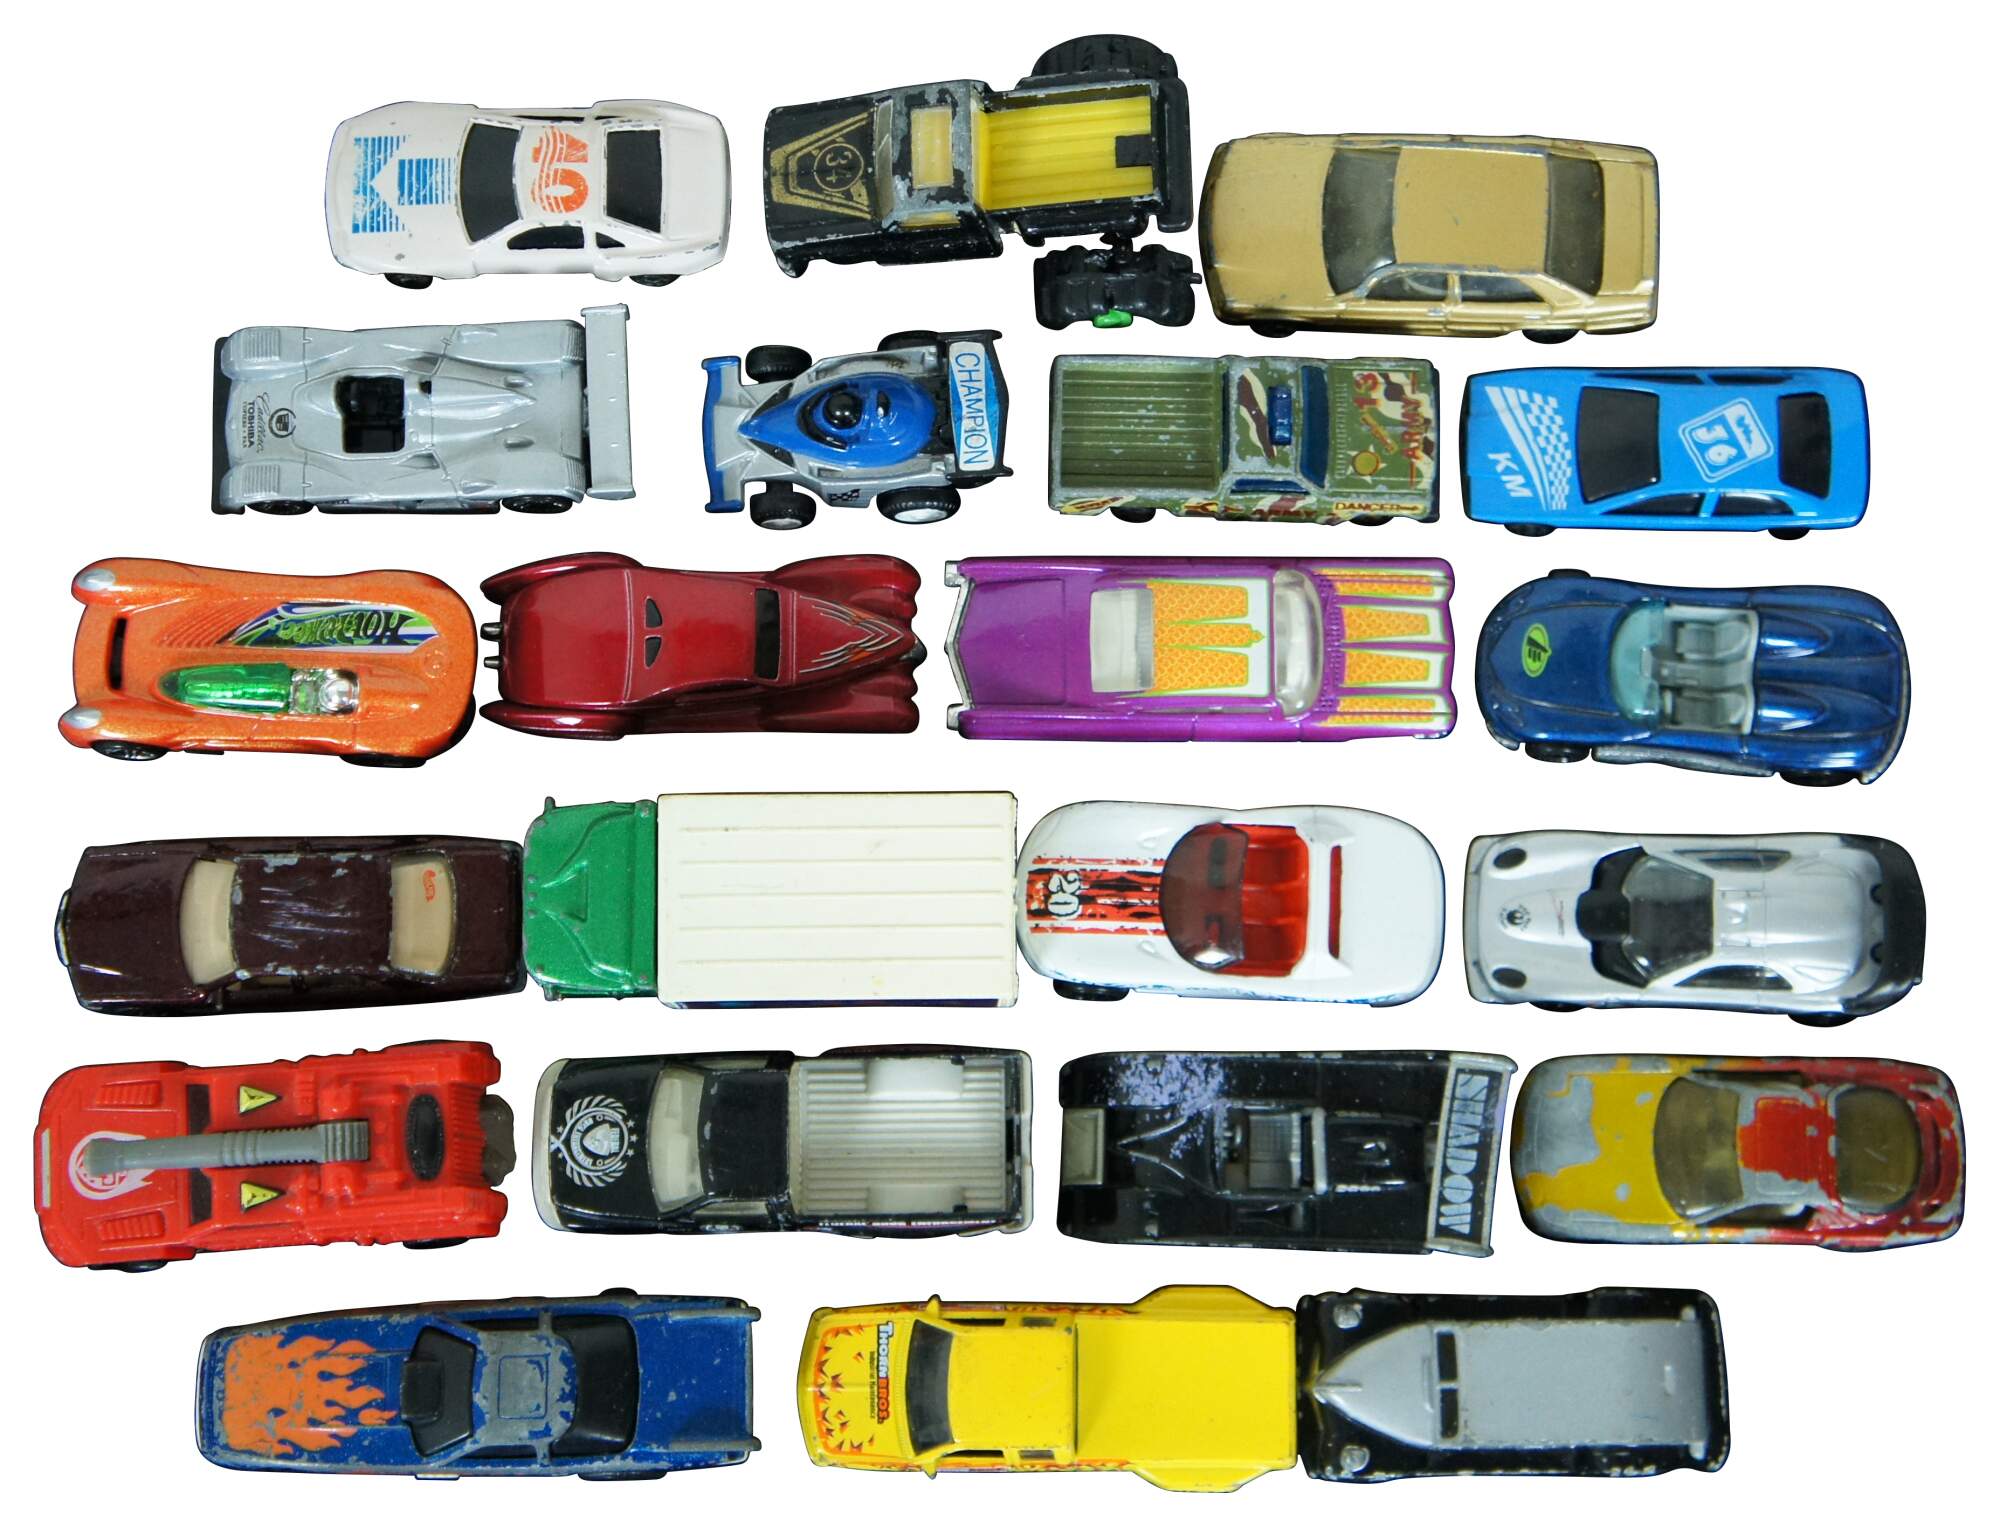 Matchbox Cars Assorted